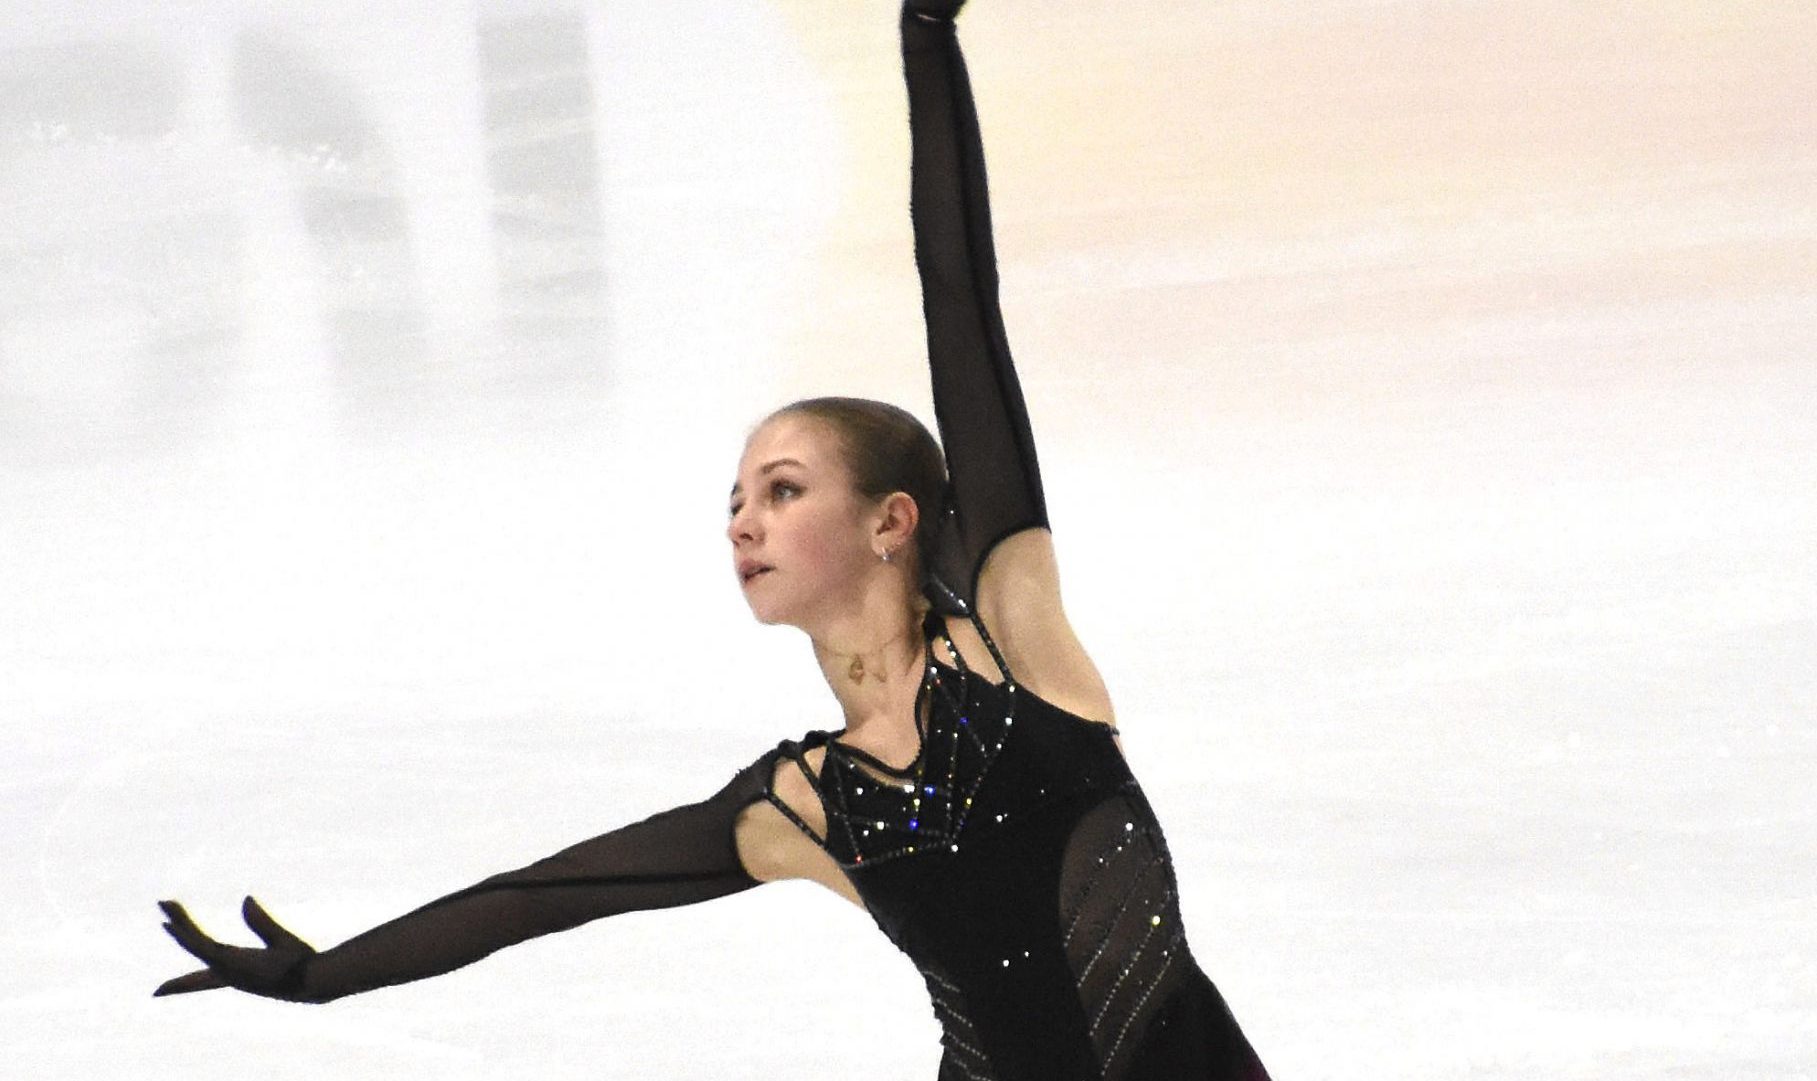 Russian skater Alexandra Trusova 002 | JAPAN Forward